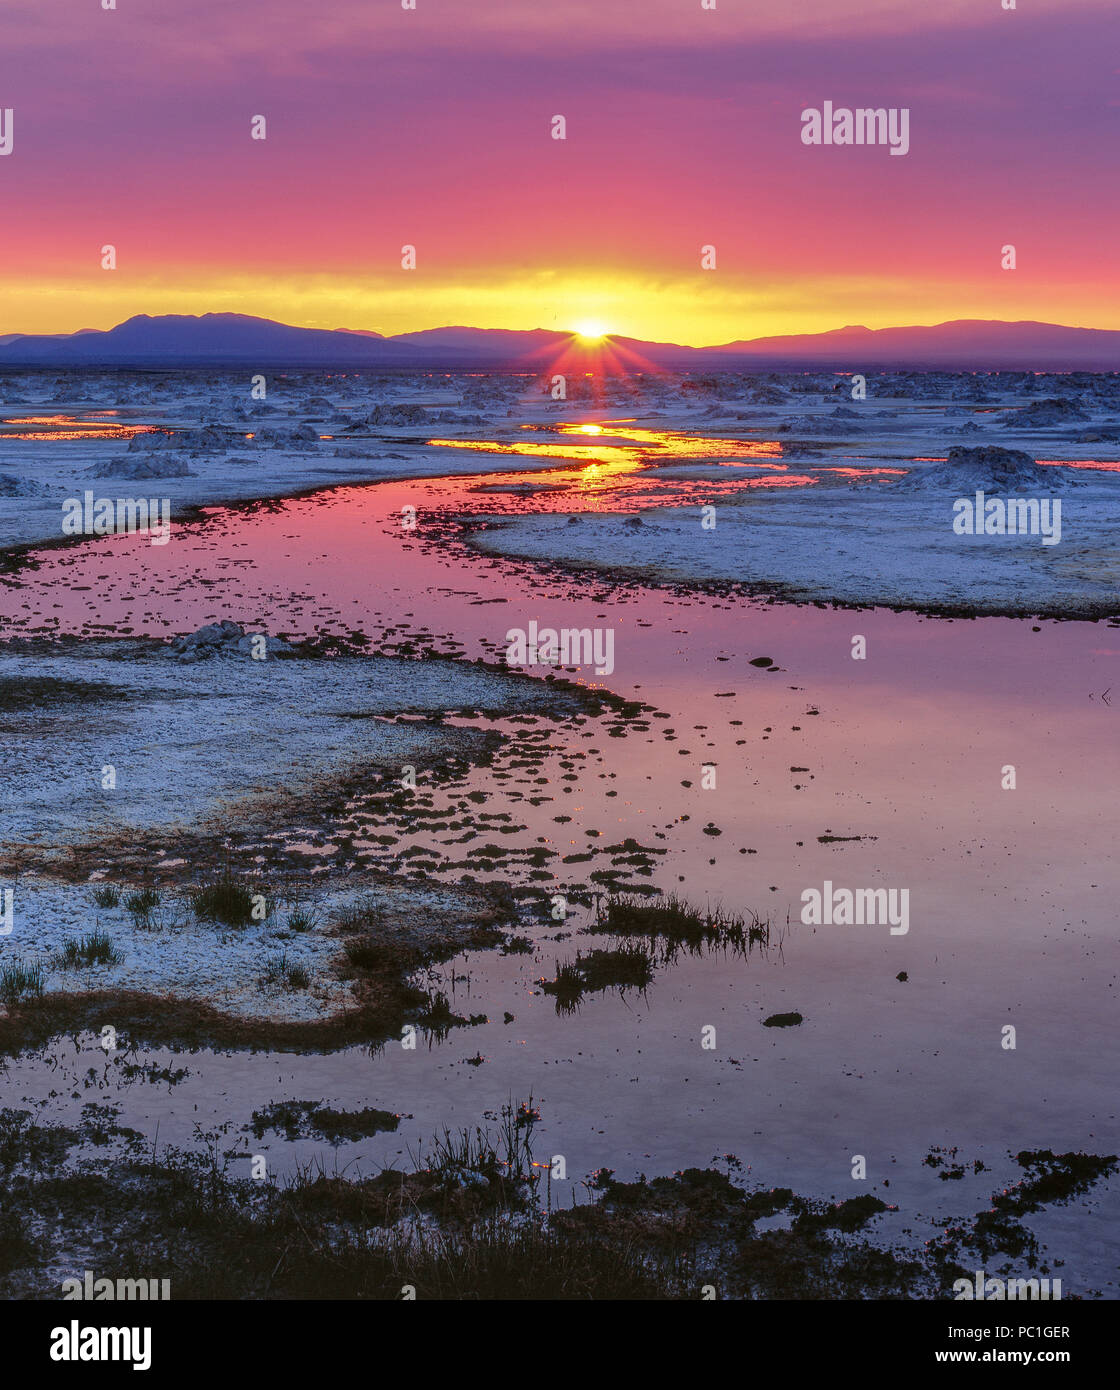 Le lever du soleil, le lac Mono, Mono Basin National Forest Scenic Area, Inyo National Forest, Californie Banque D'Images